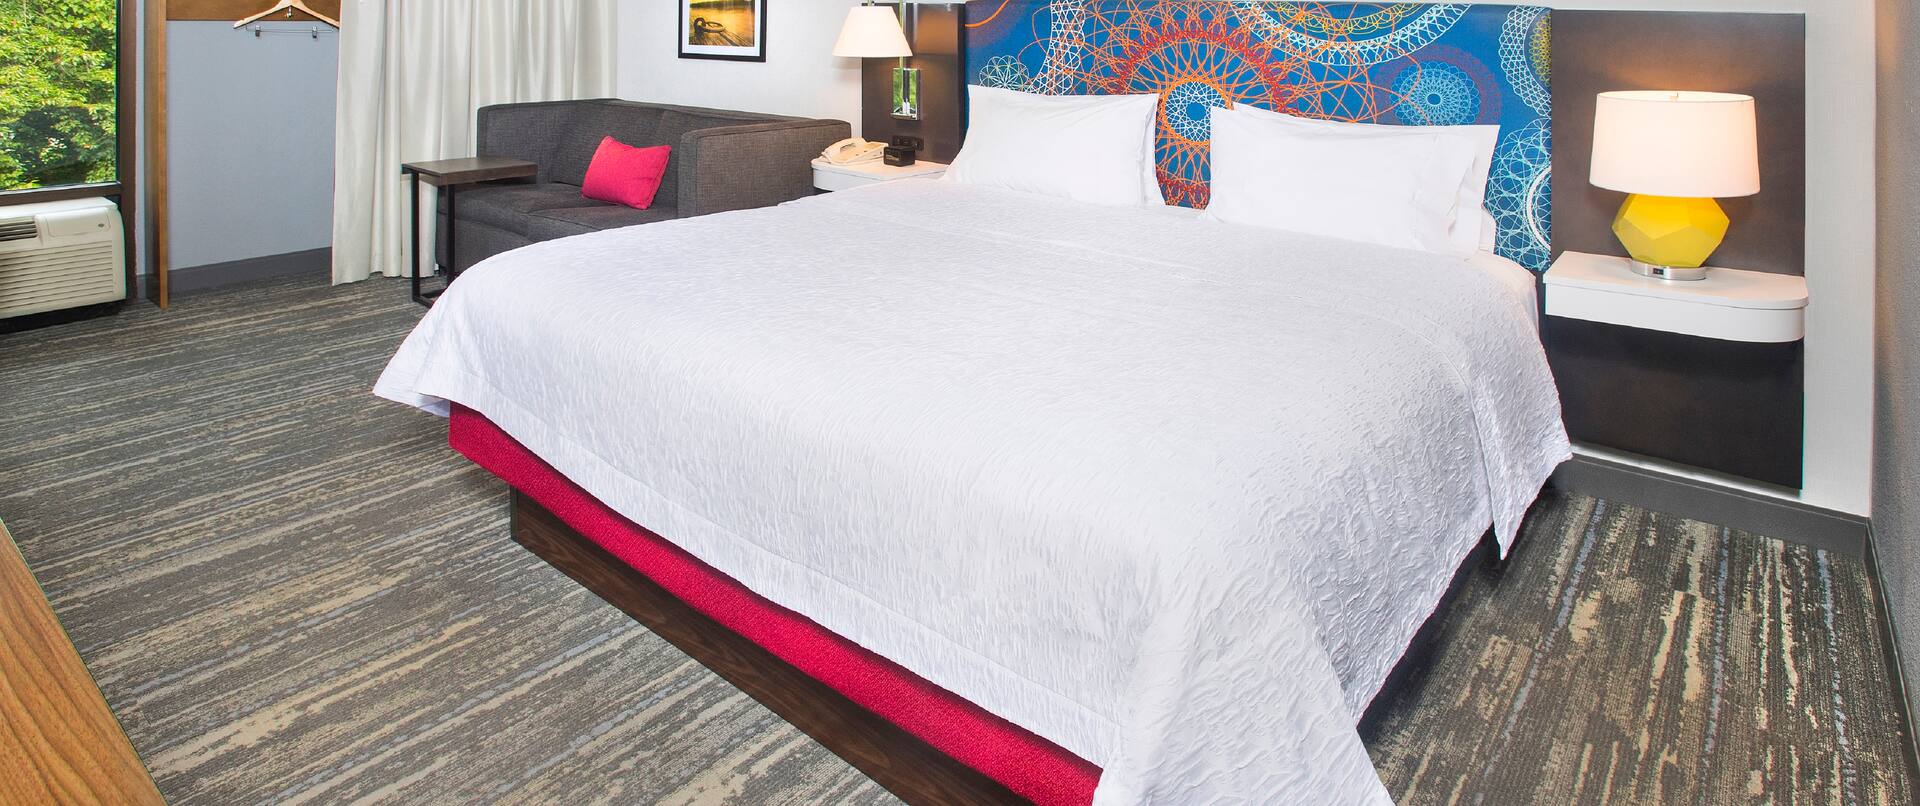 Hampton Inn & Suites Annapolis Hotel, MD - King Room With Sofa